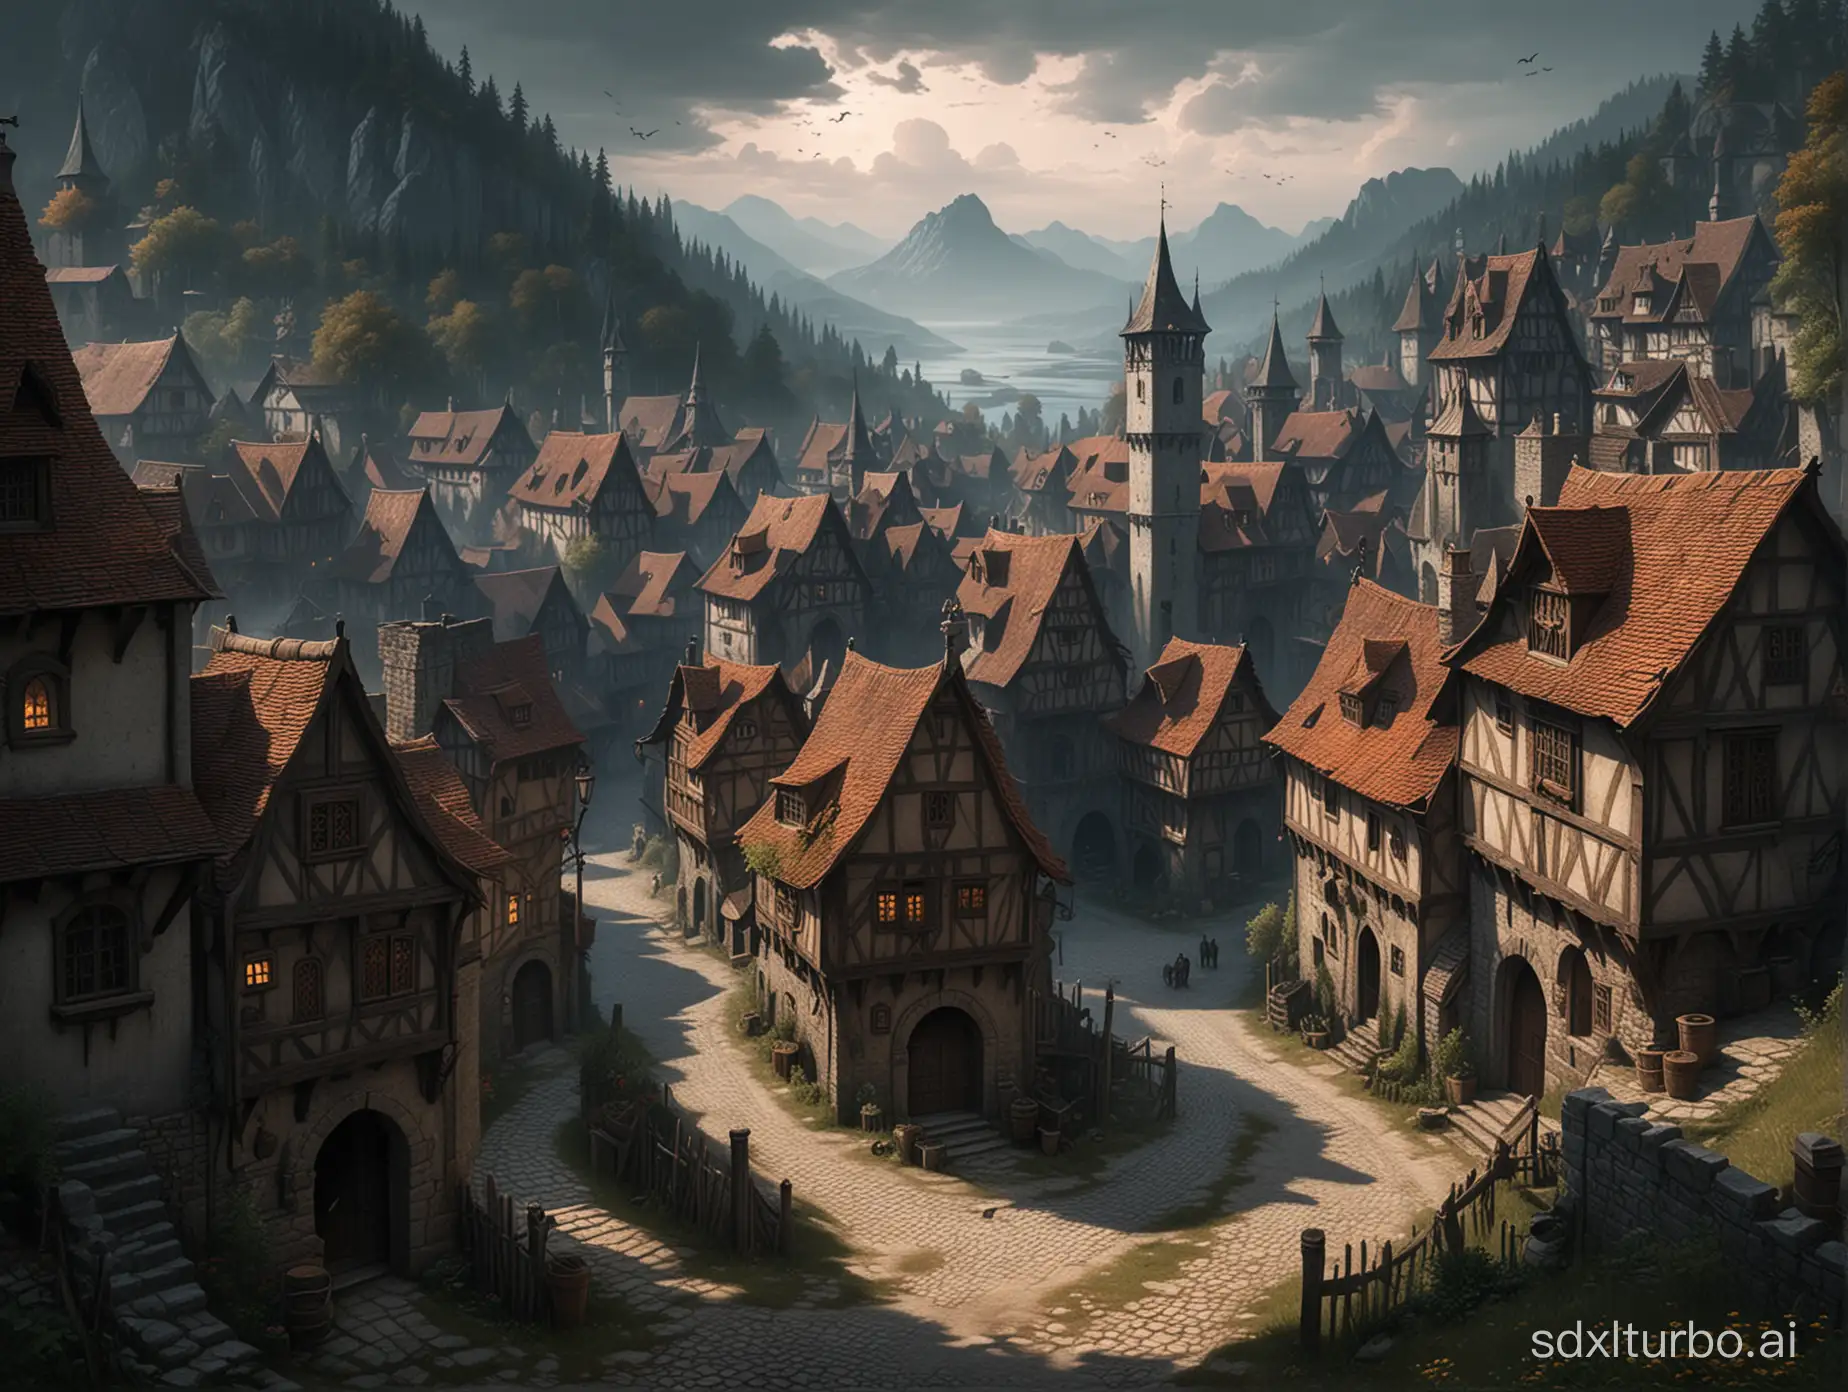 Ravenloft style picture of a medieval village